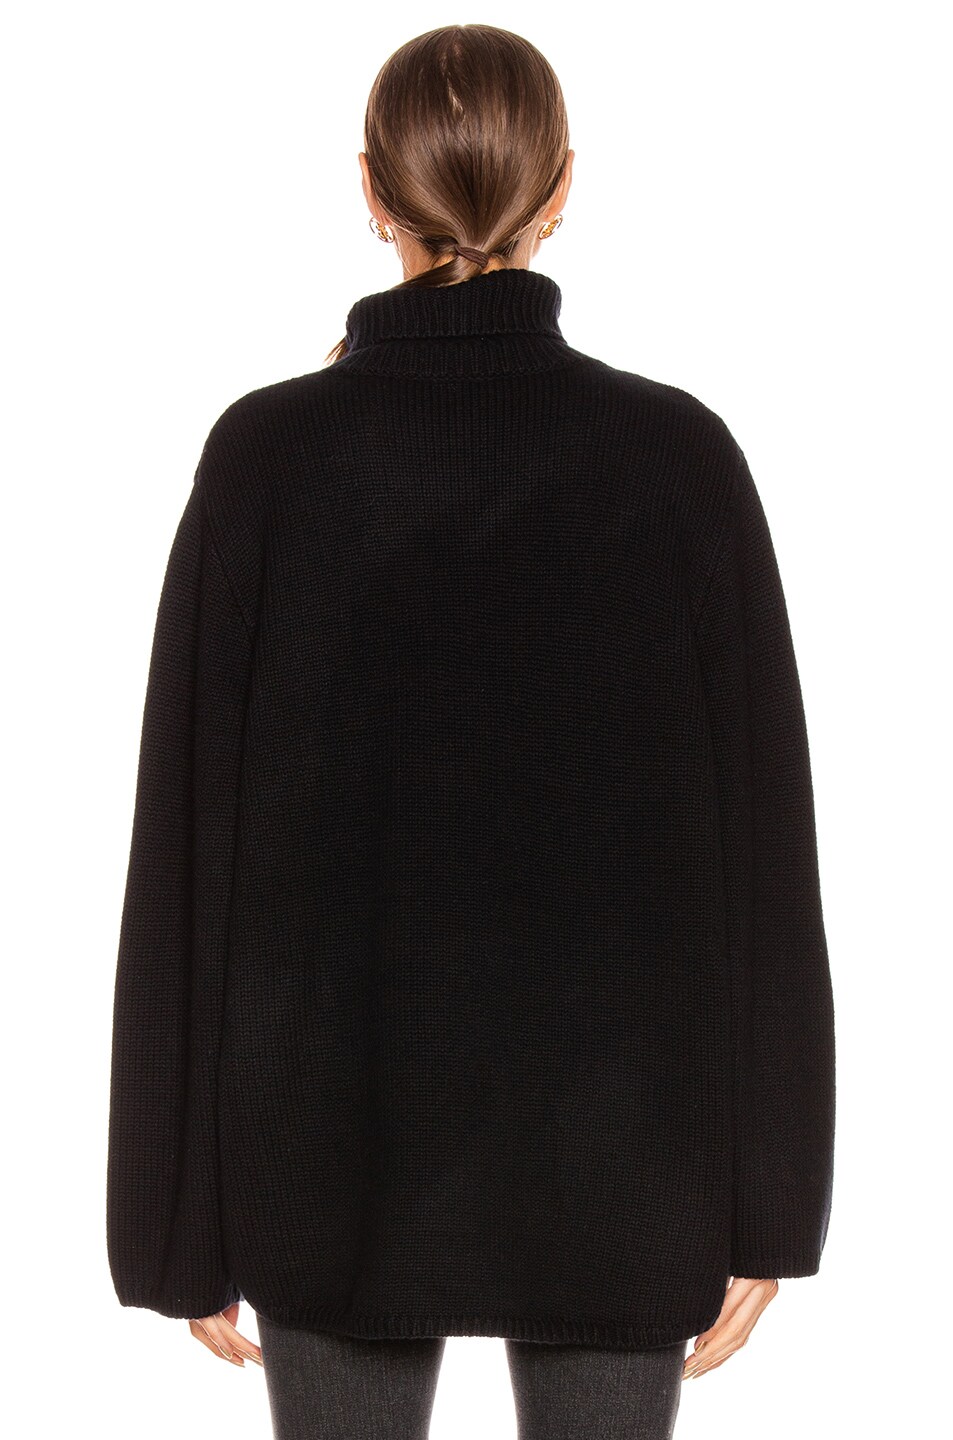 Toteme Cambridge Sweater in Black | FWRD